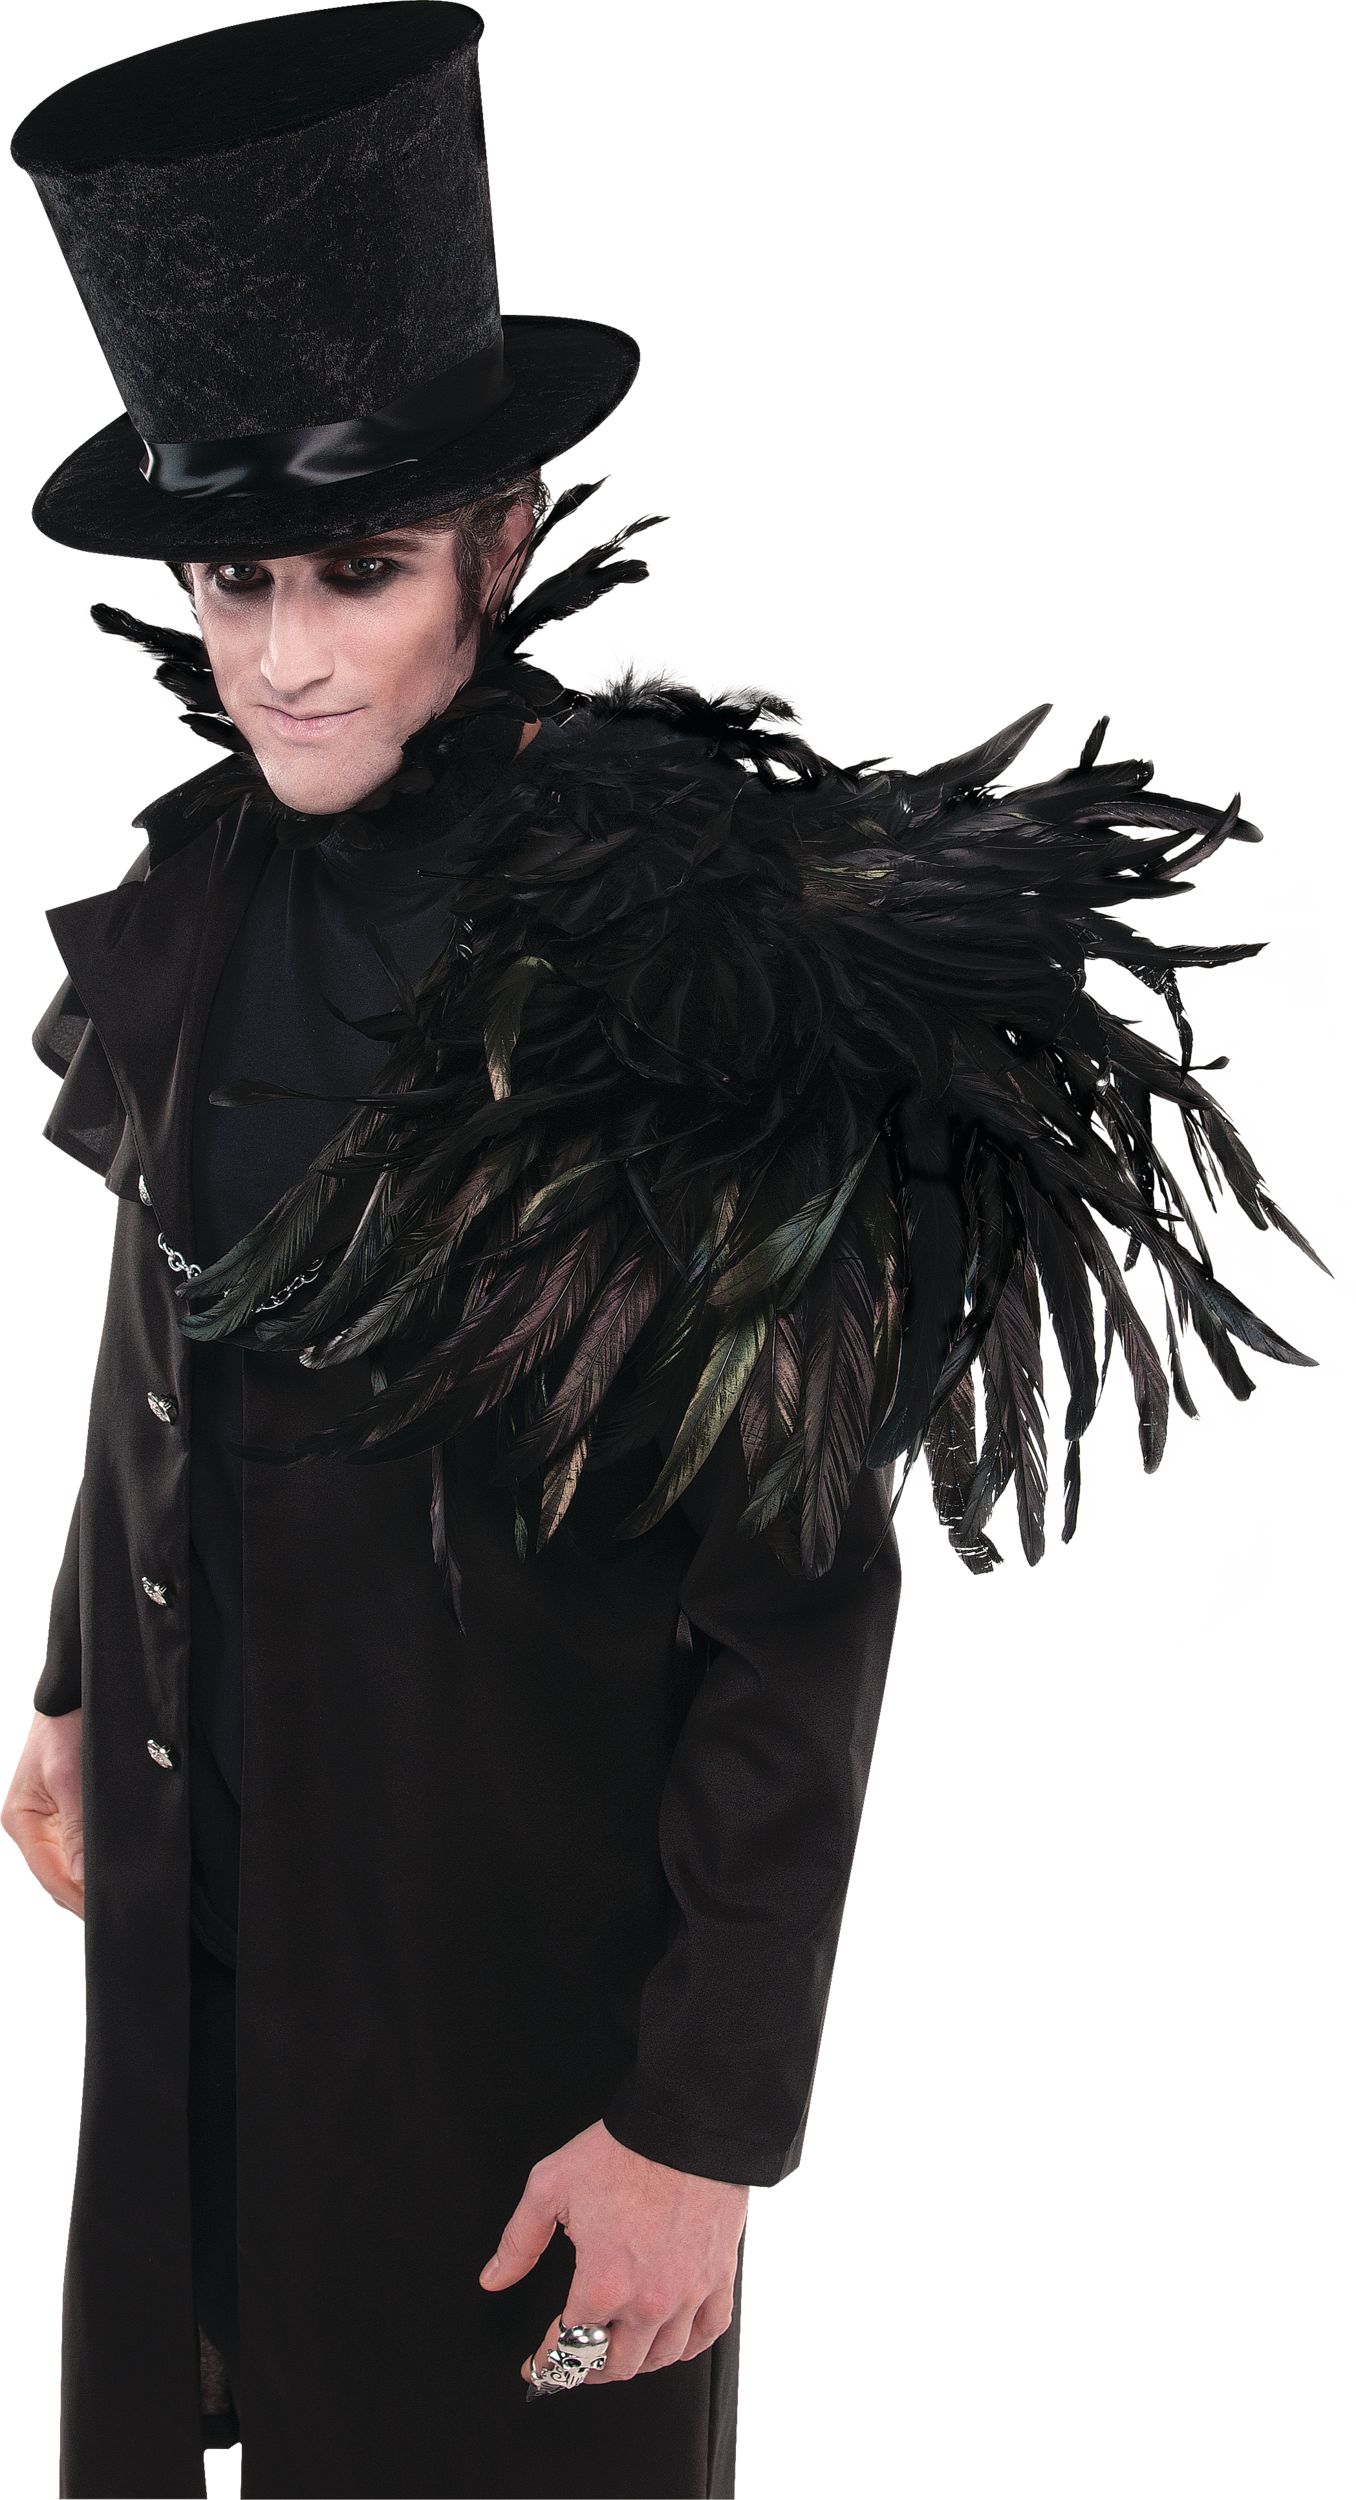 Goth Pixie Gemstone Headpiece, Black, One Size, Wearable Costume